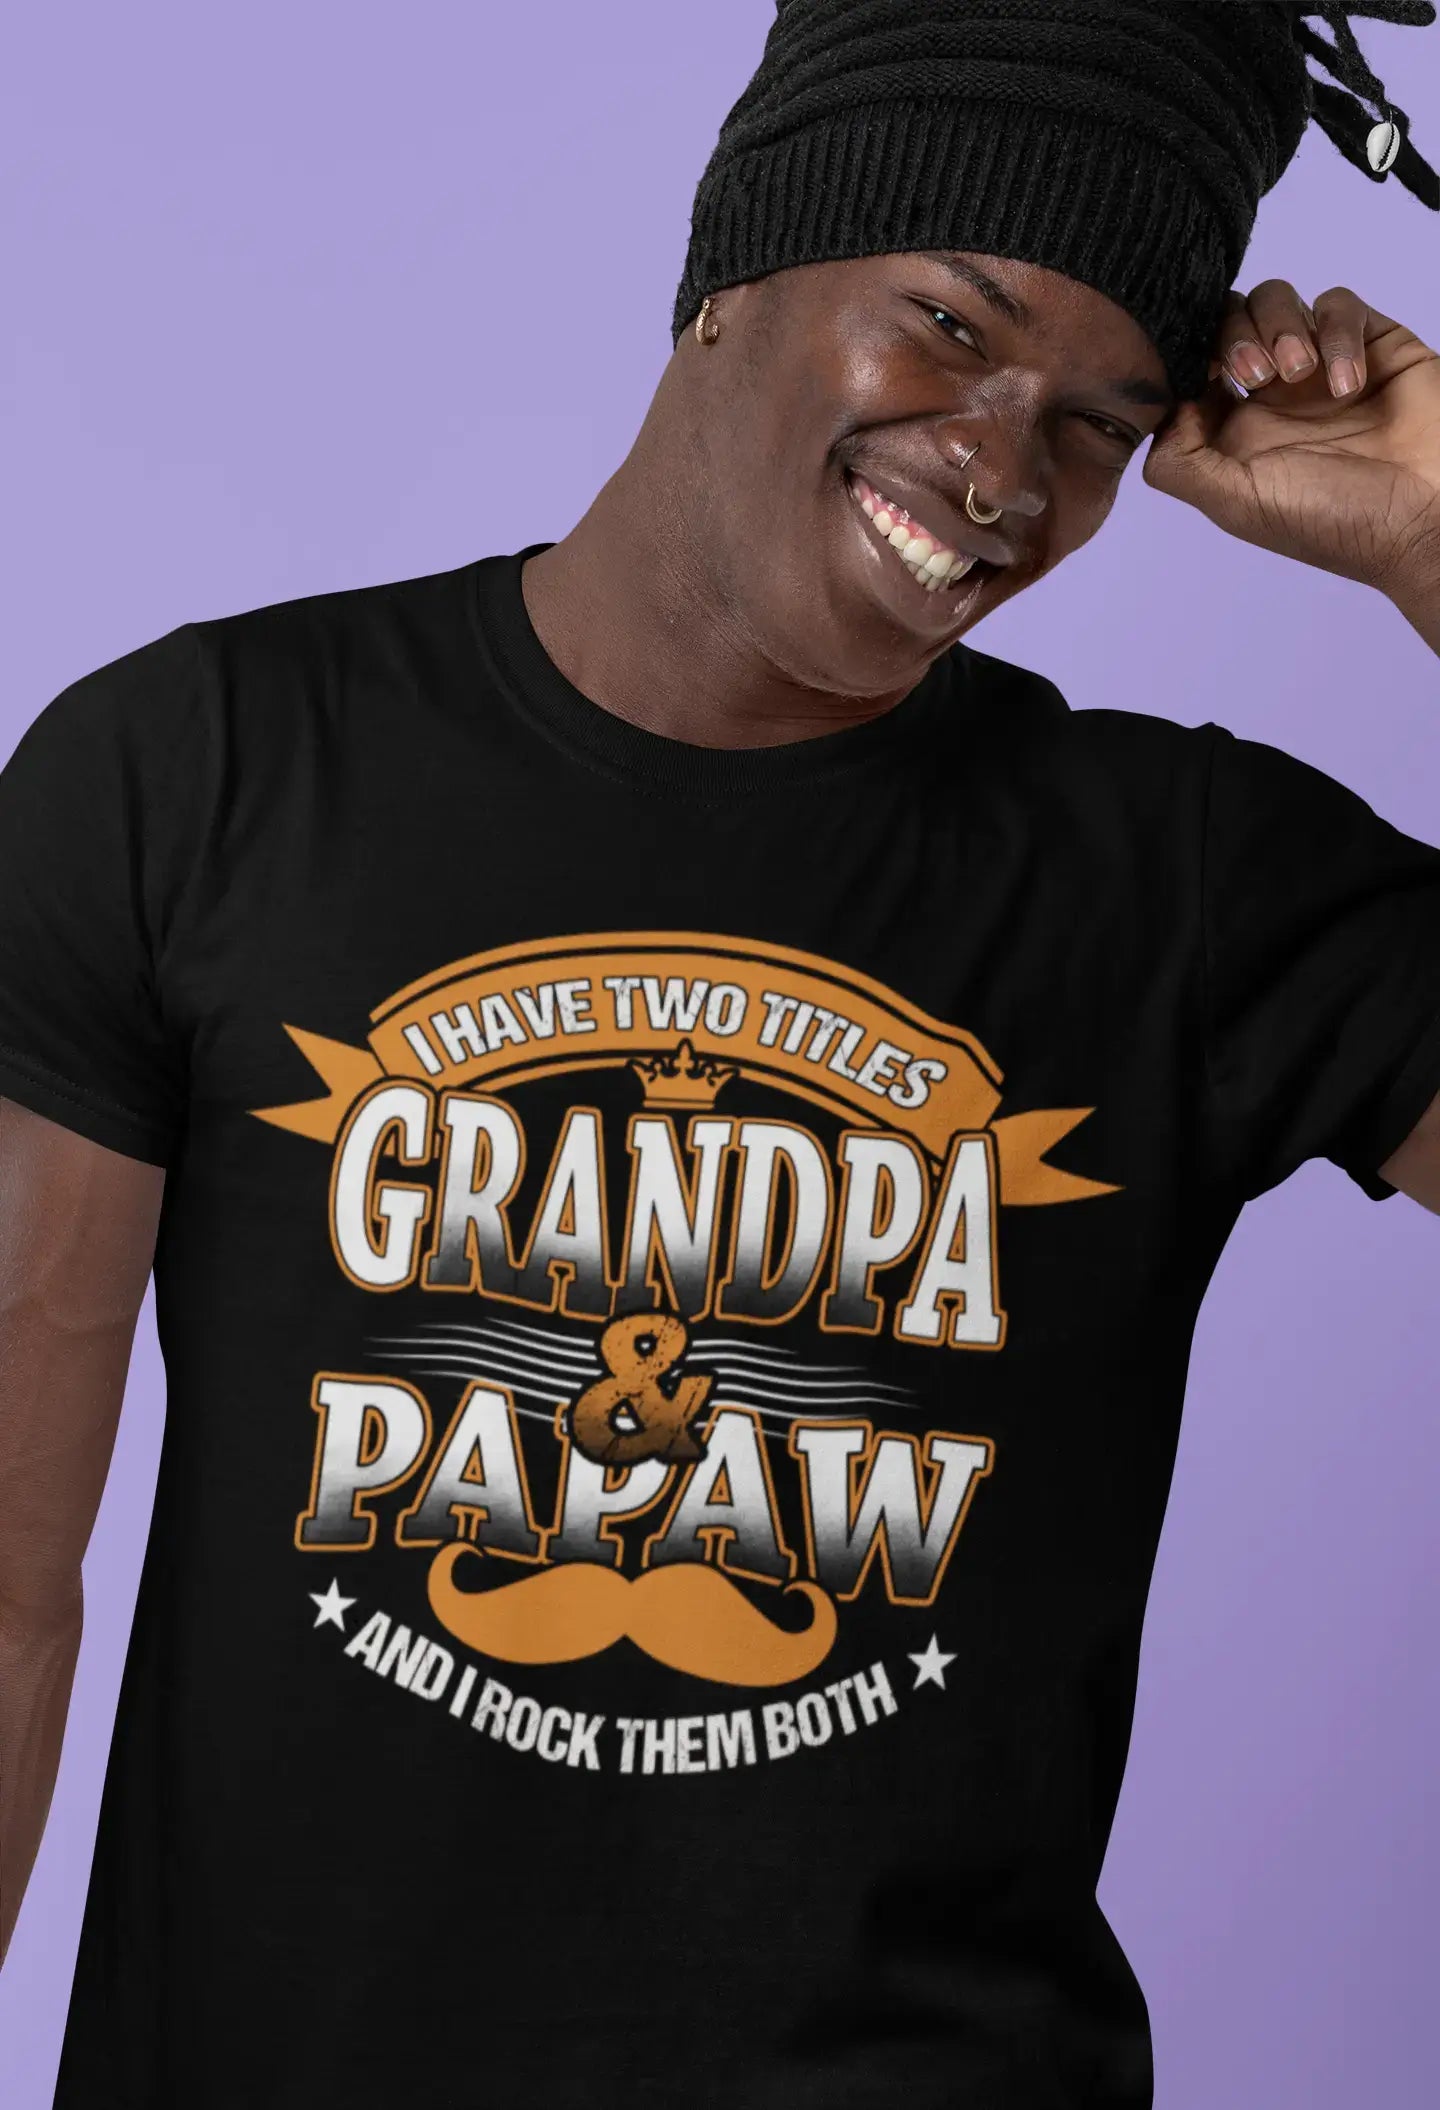 ULTRABASIC Men's Novelty T-Shirt I Have 2 Titles Grandpa and Papaw Tee Shirt